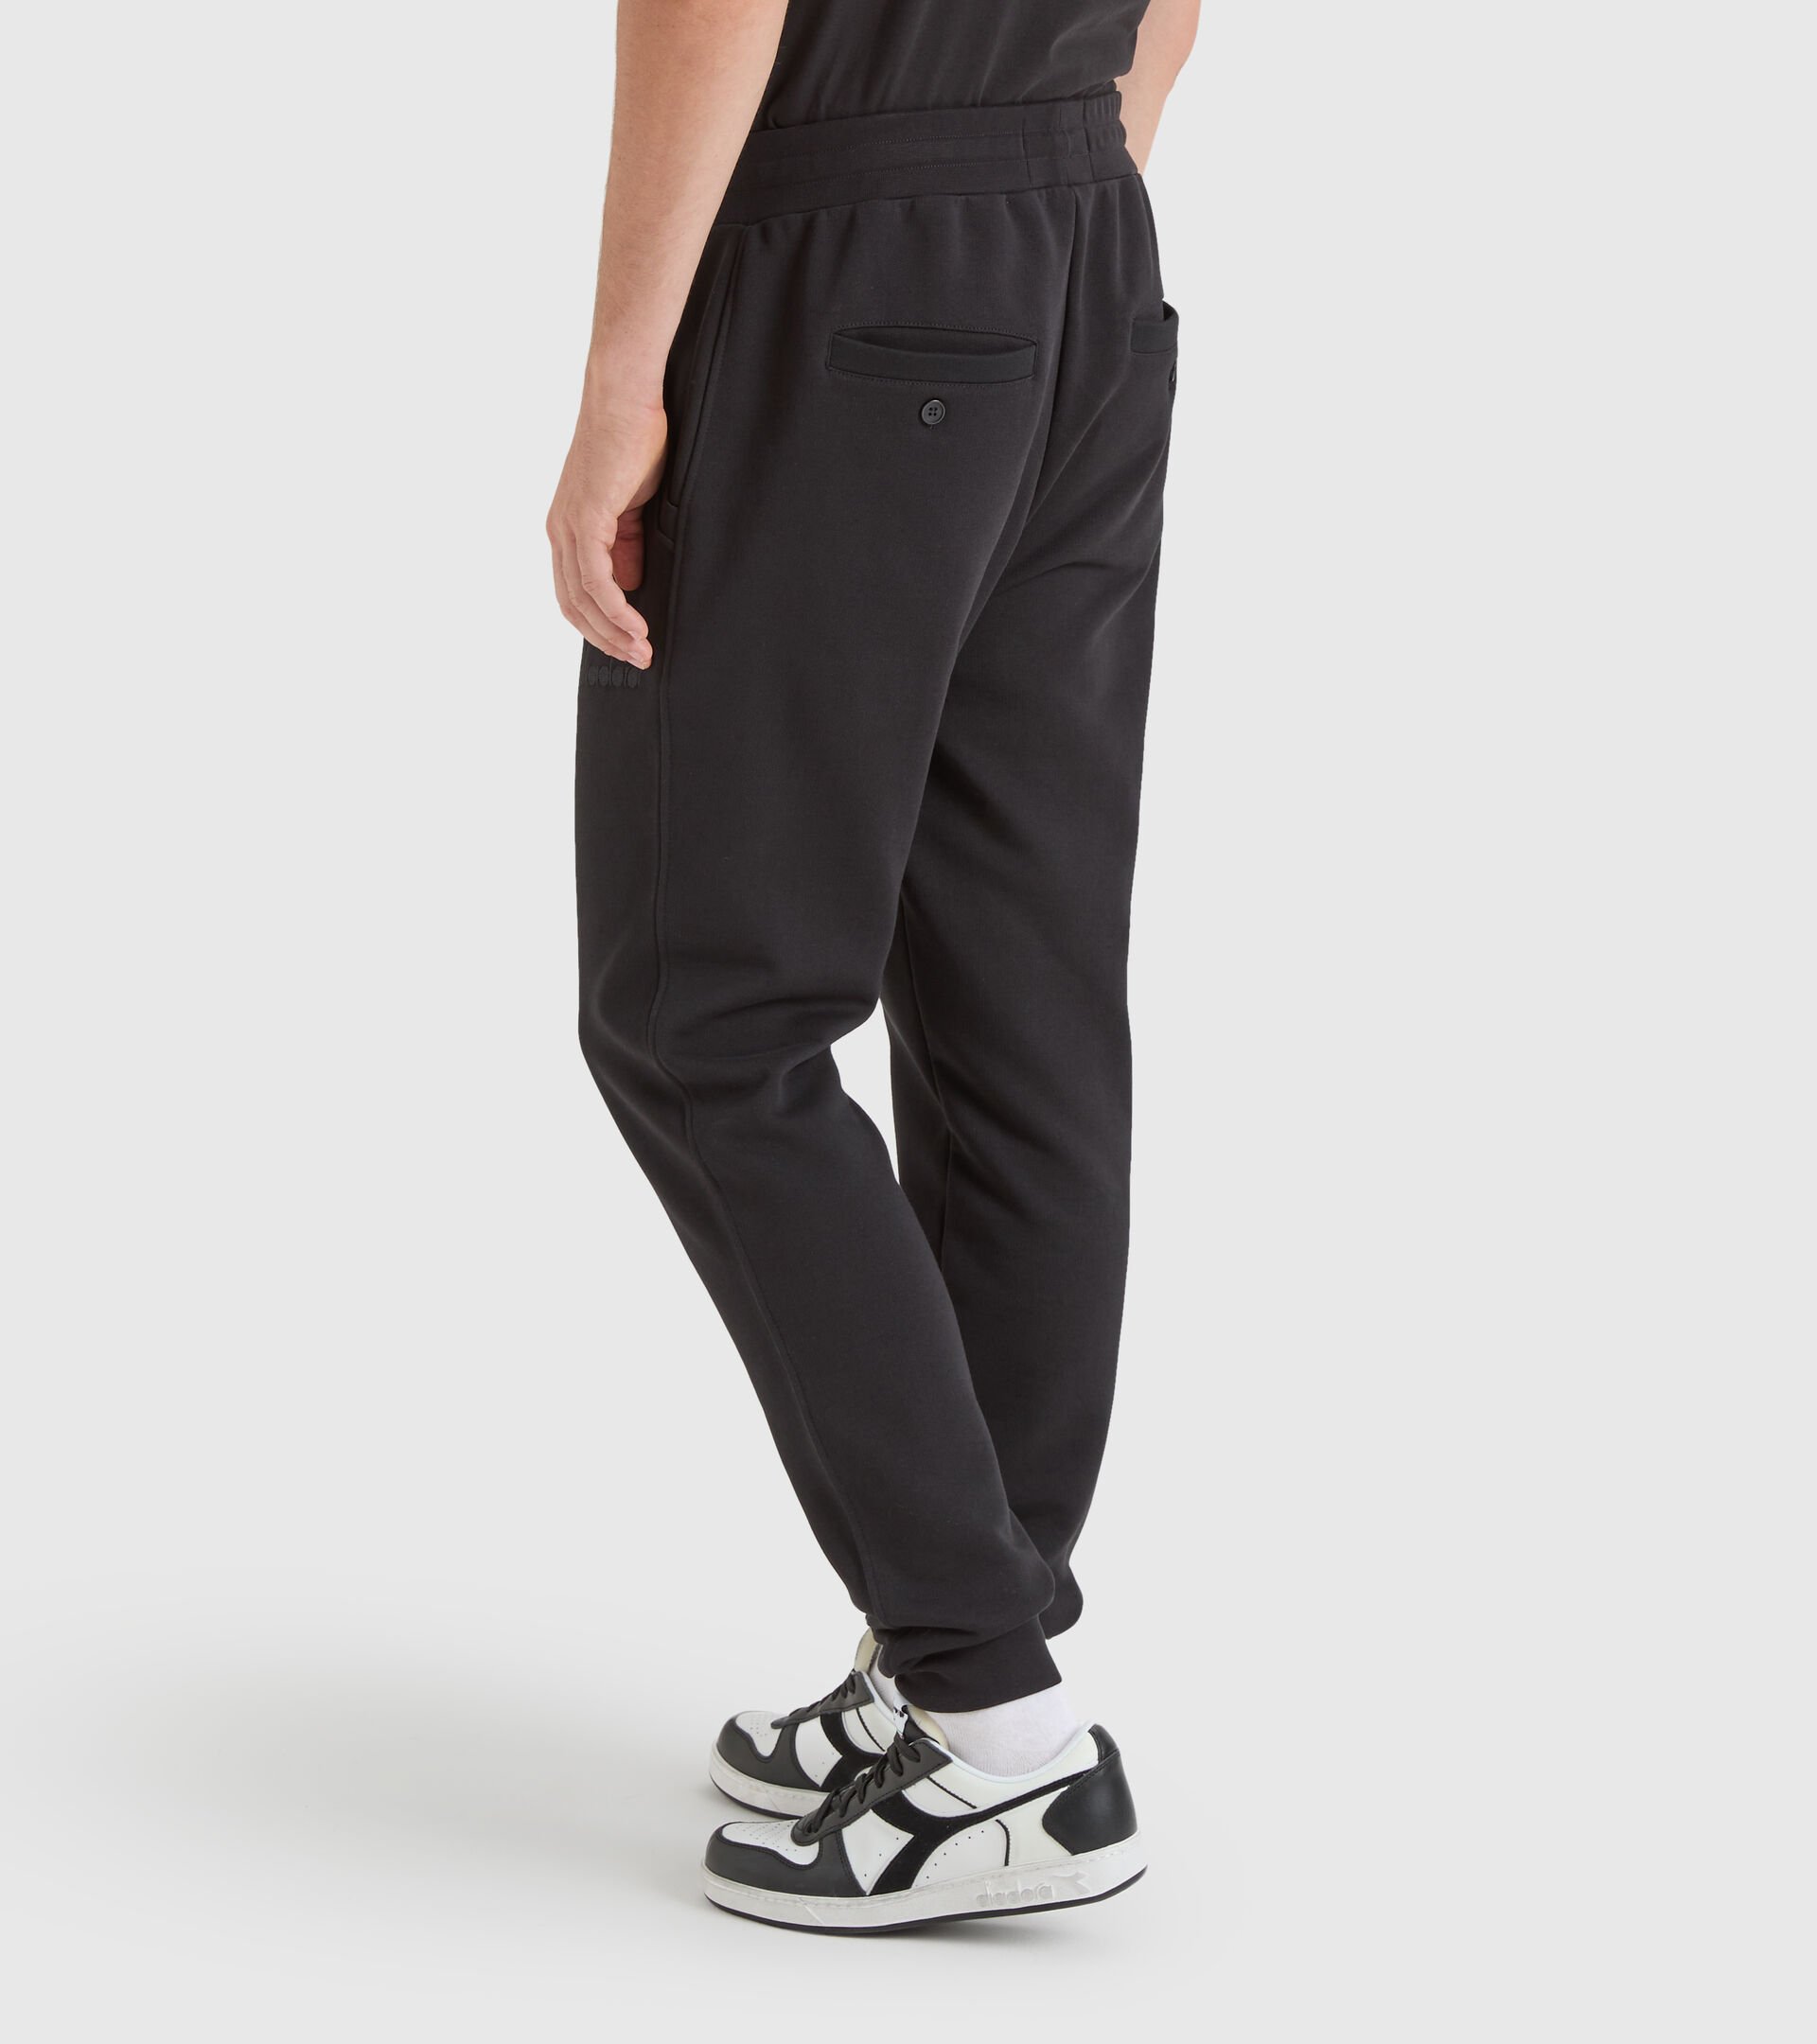 Cotton sports trousers - Made in Italy - Men JOGGER PANT MII BLACK - Diadora